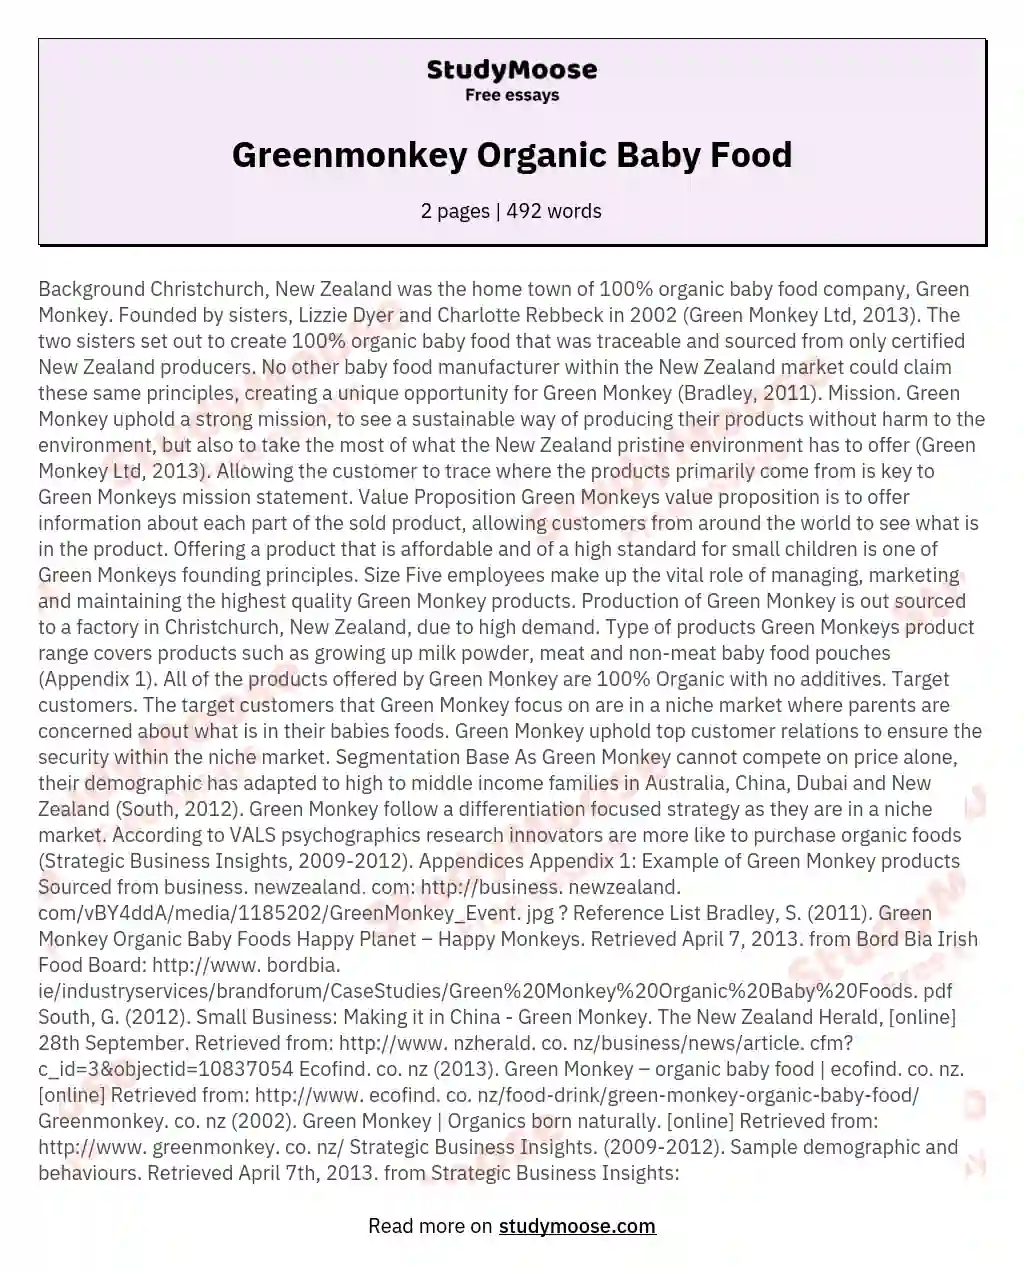 Greenmonkey Organic Baby Food essay